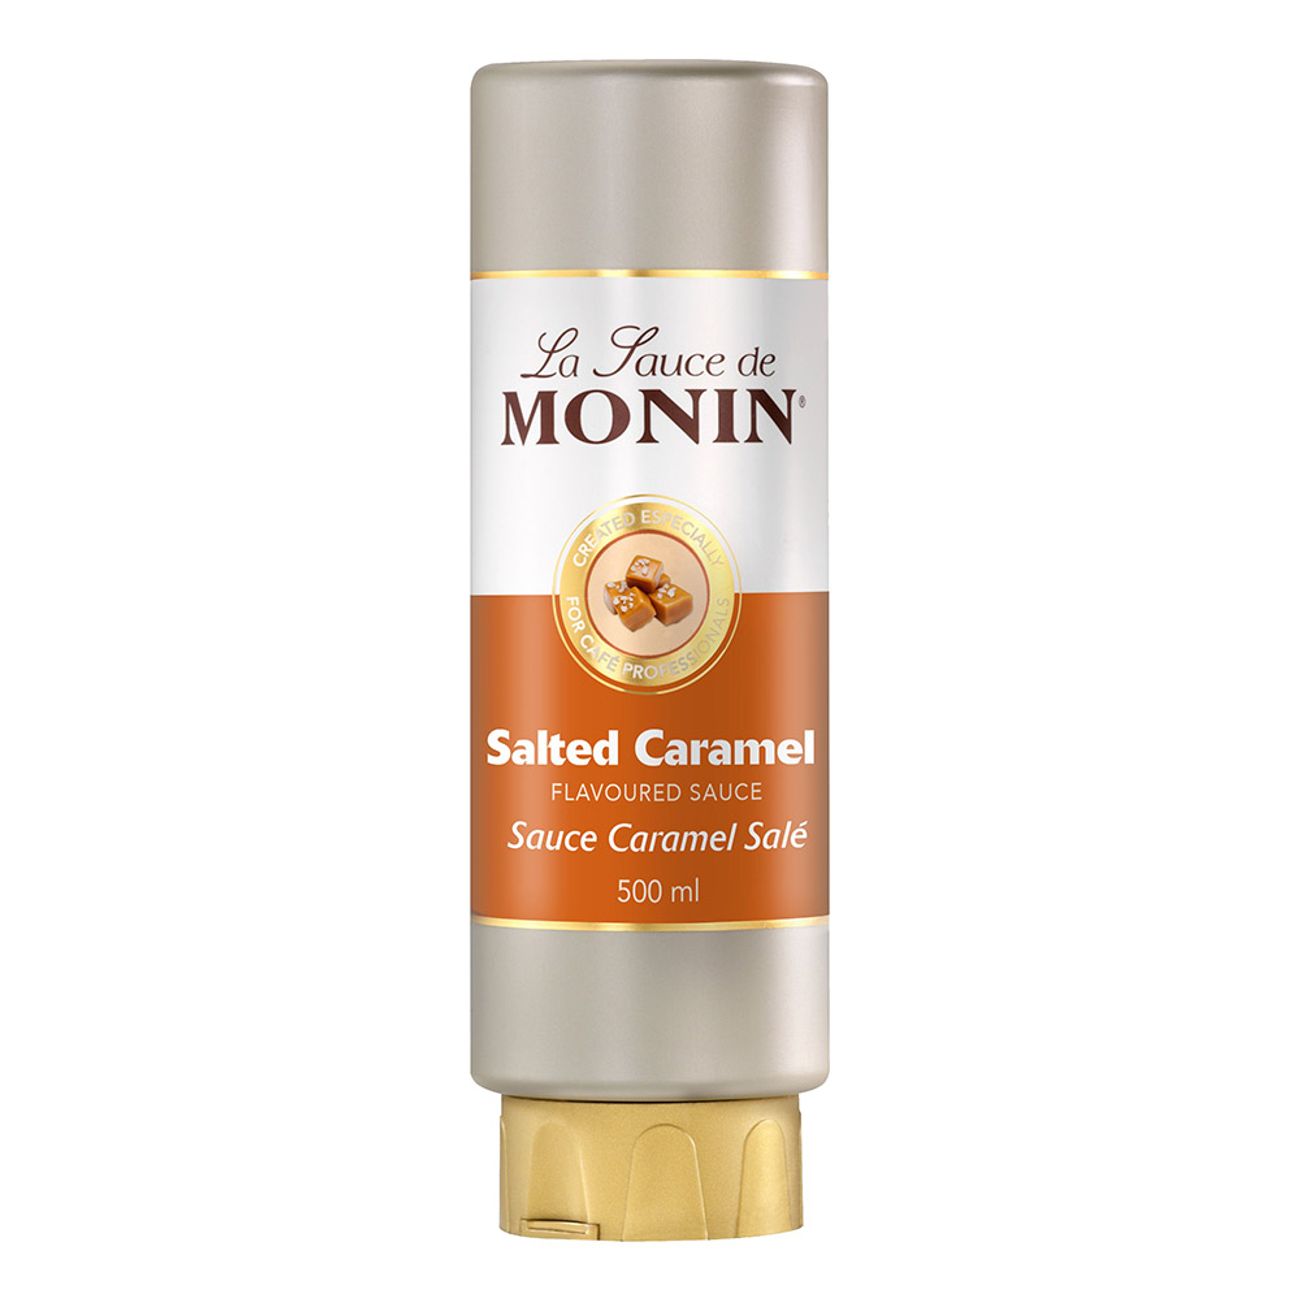 monin-salted-caramel-sauce-1